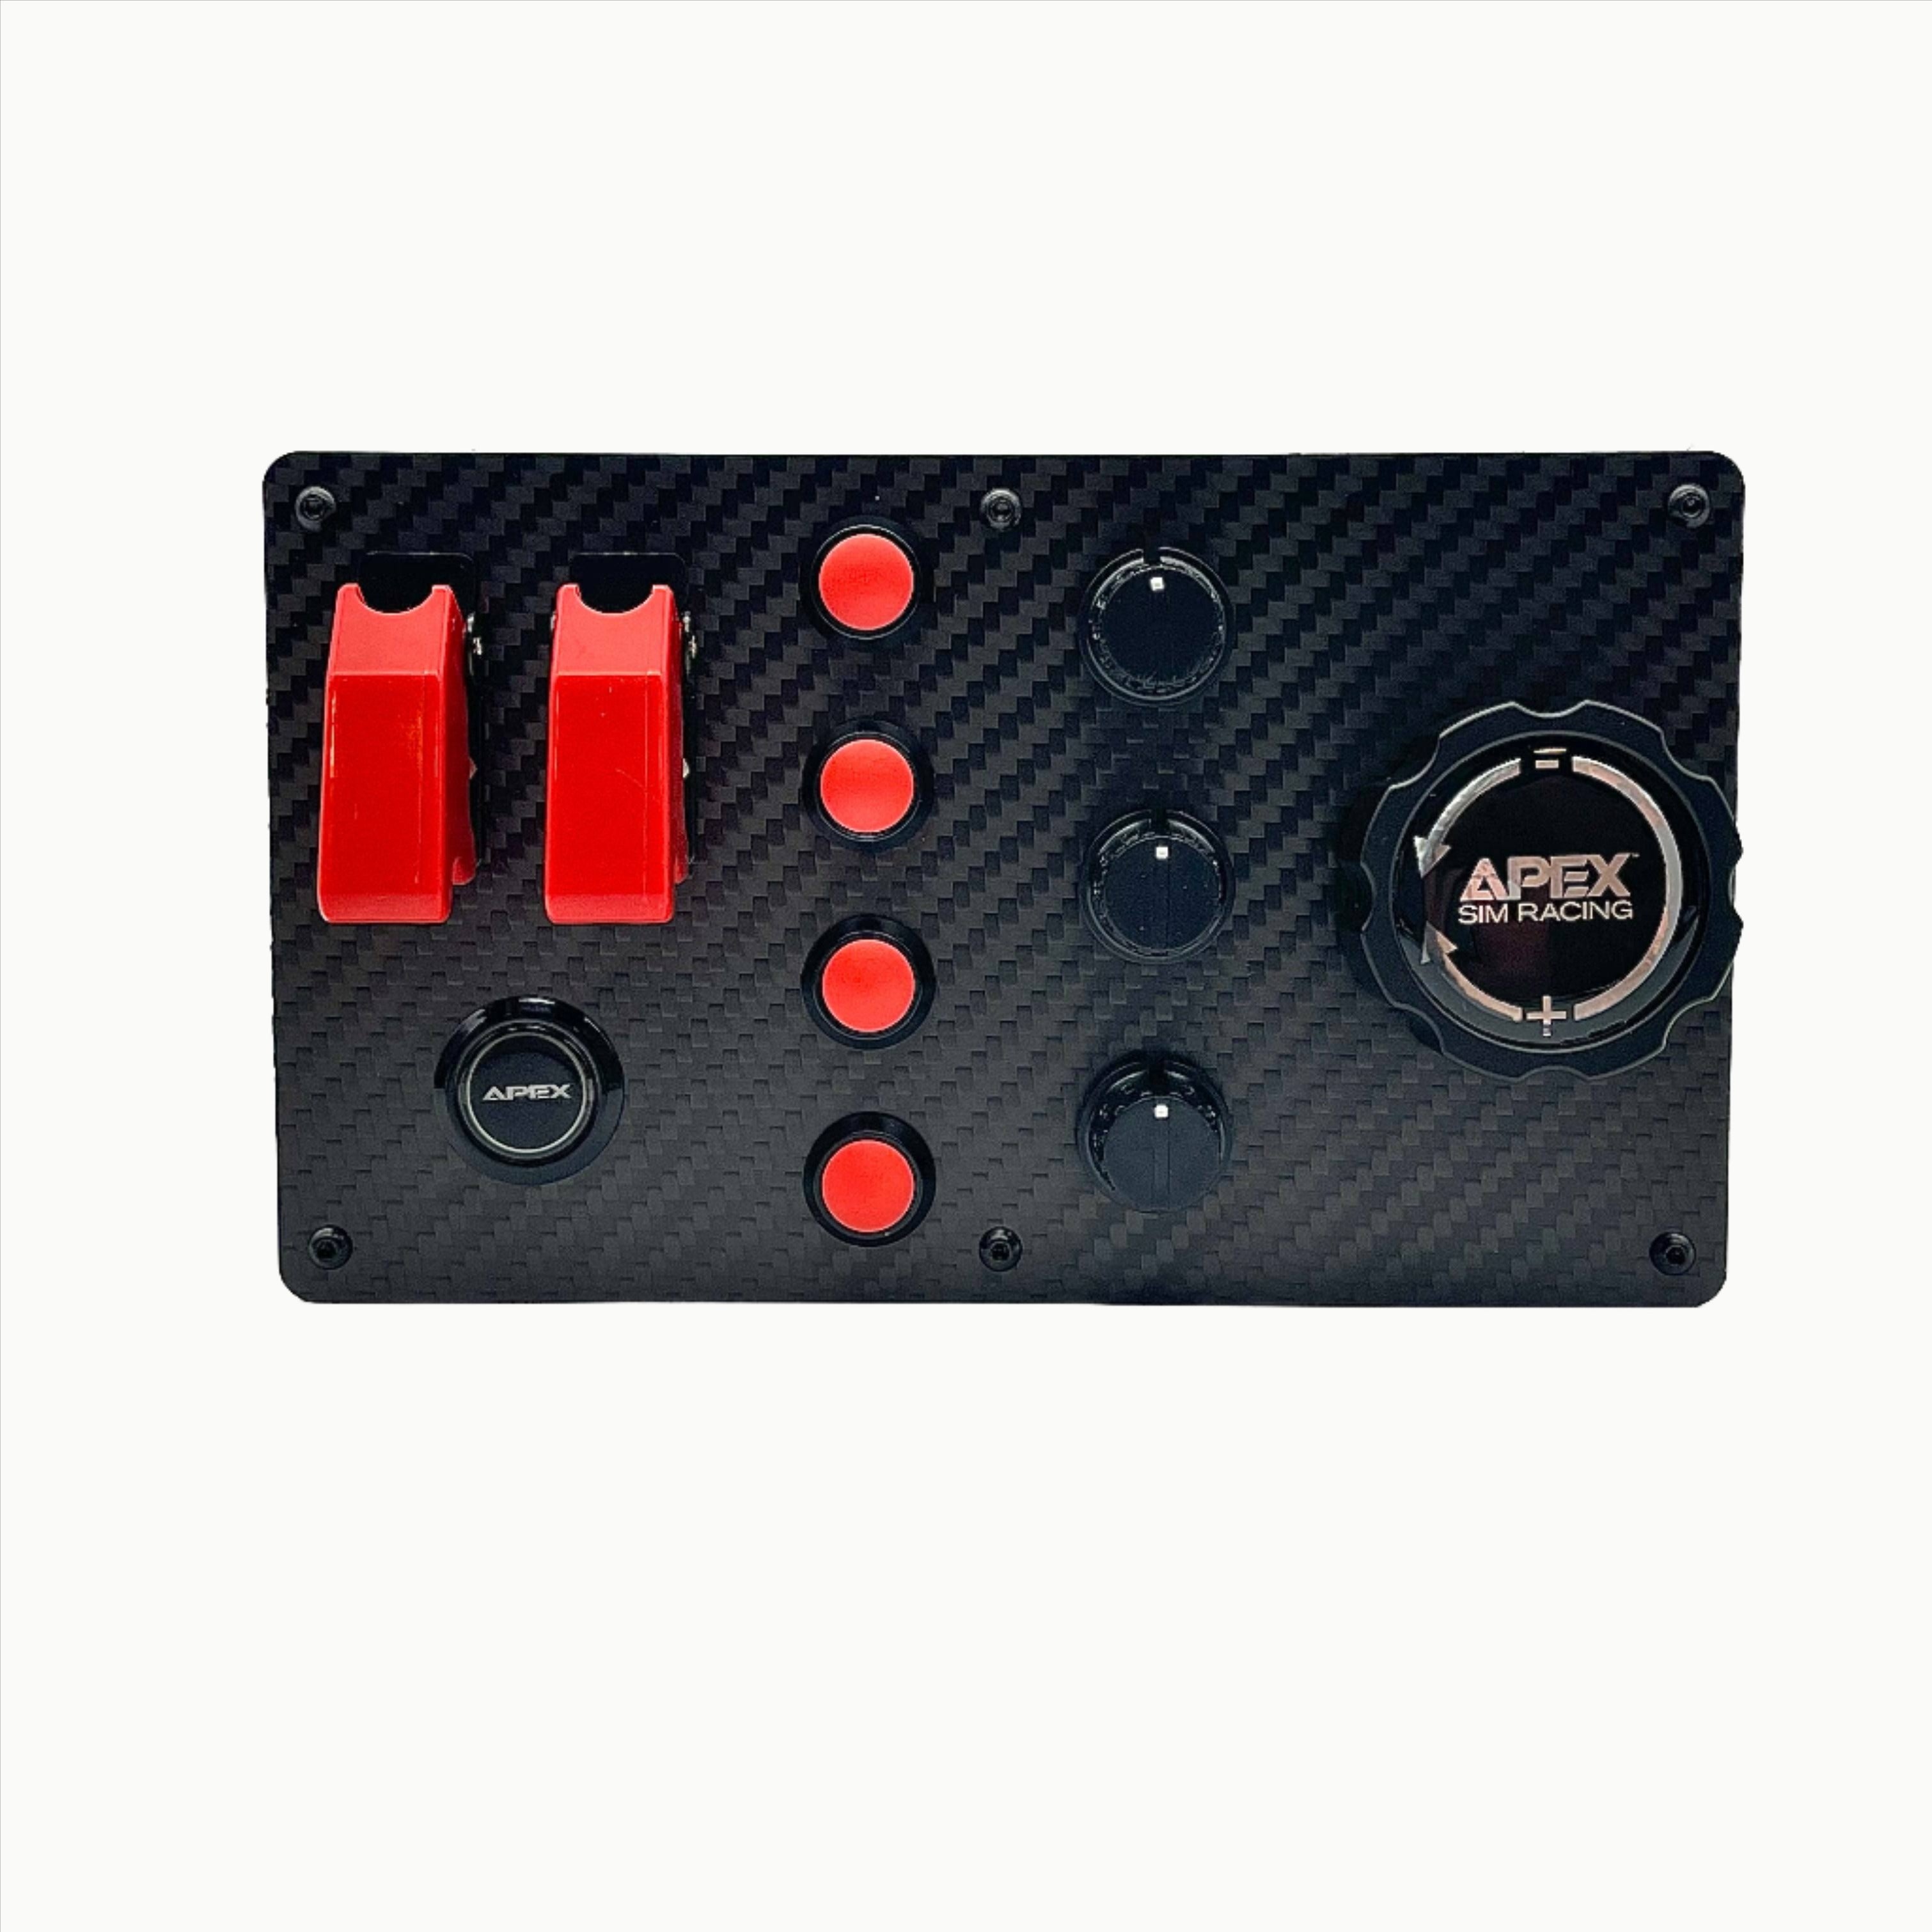 Button box 📦 .. audisport - Precision Sim Racing